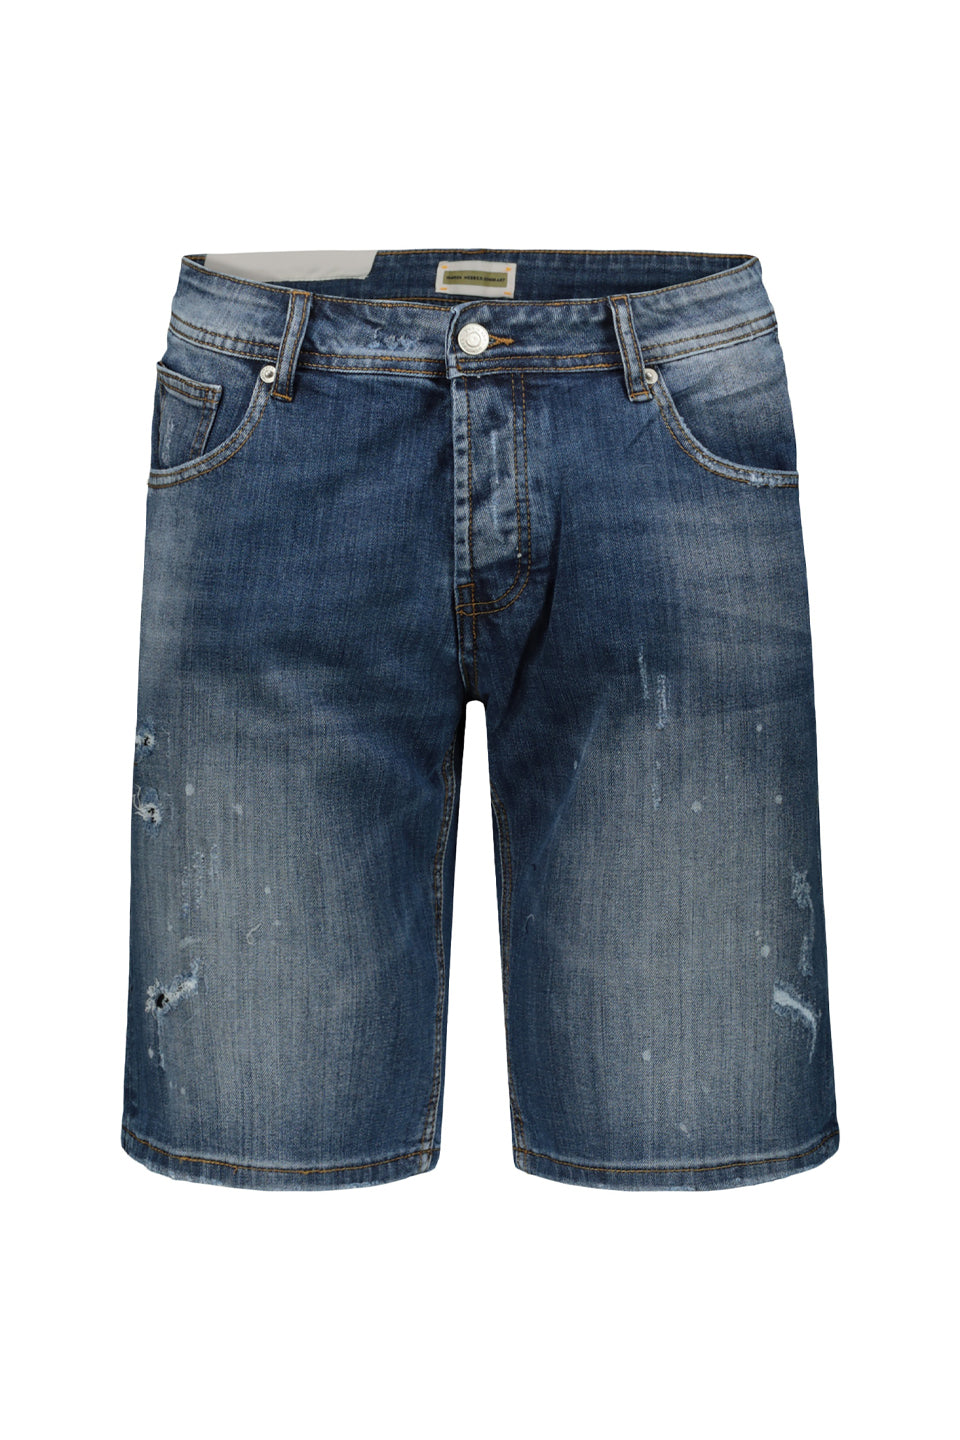 Classic Blue Jean Shorts